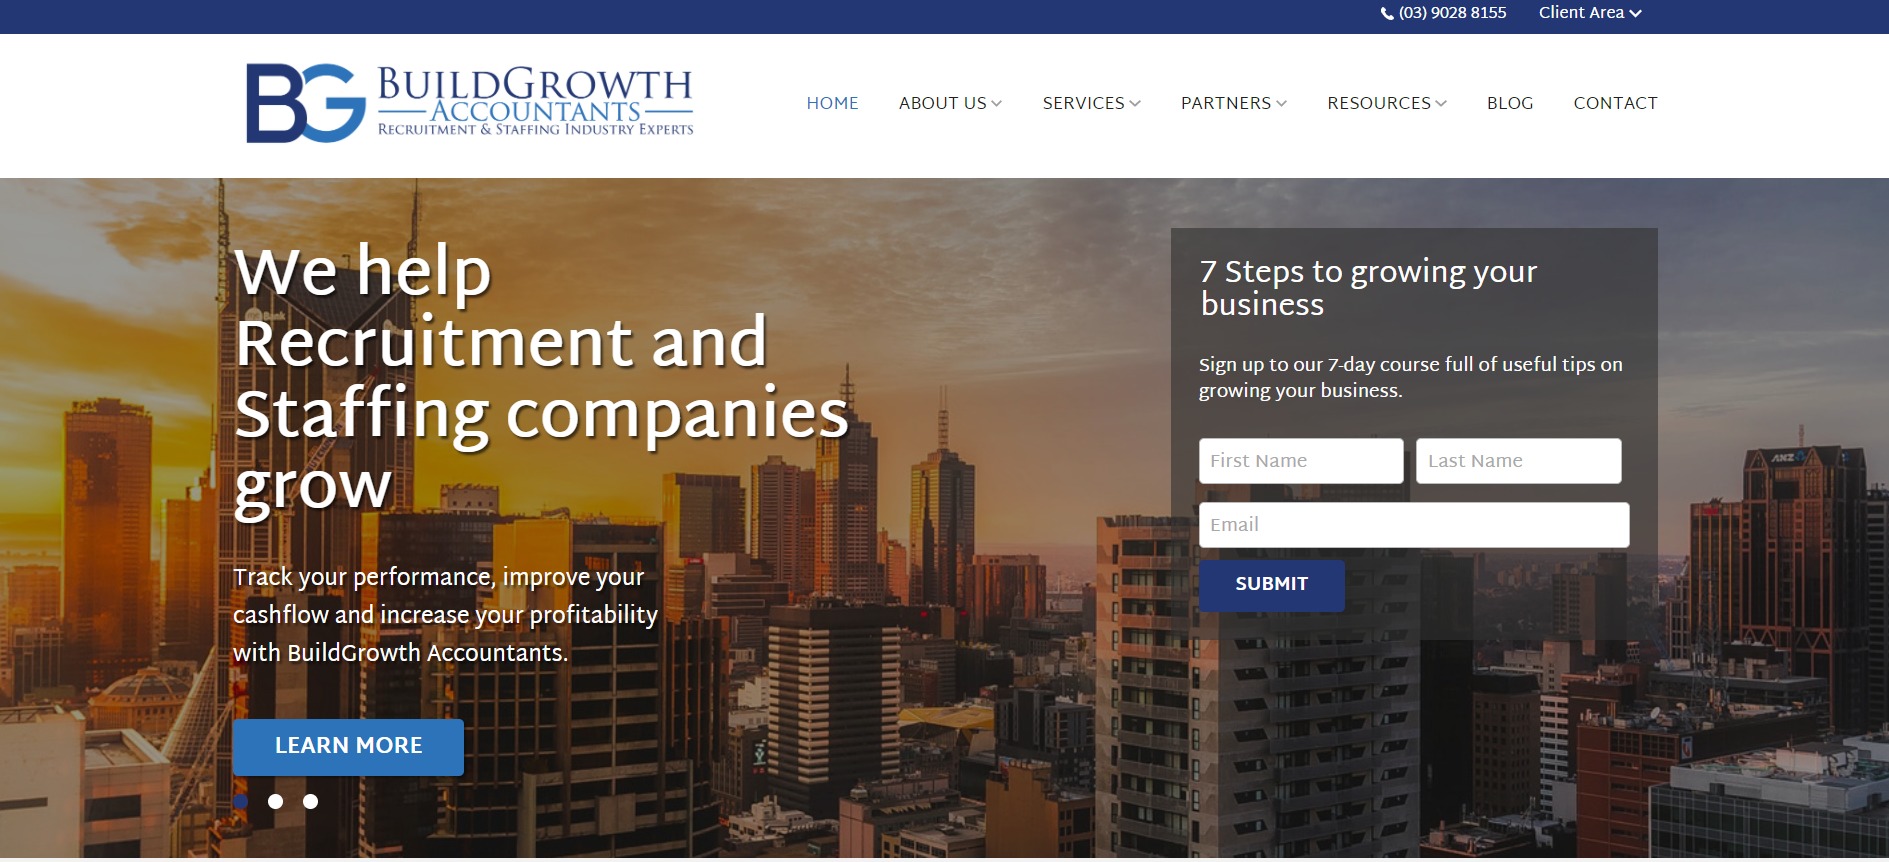 Buildgrowth Accountants